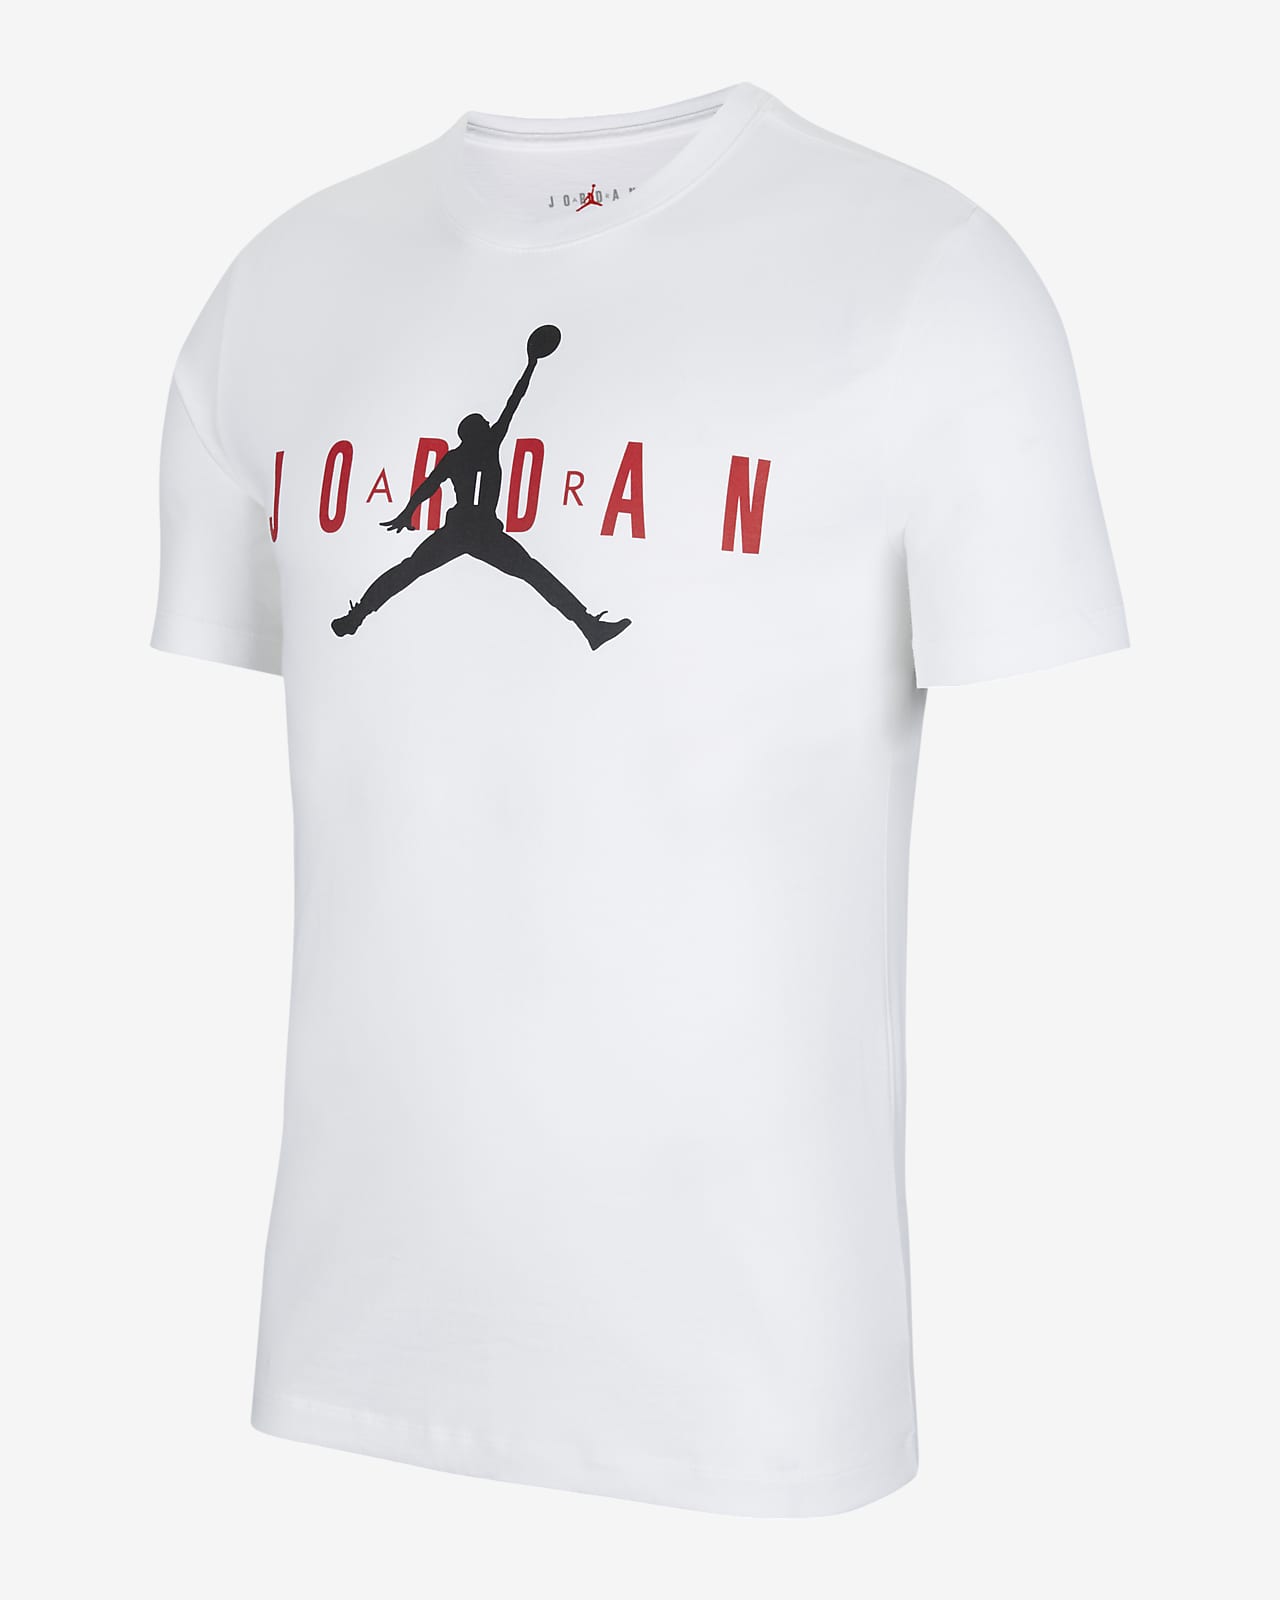 jordan logo t shirt